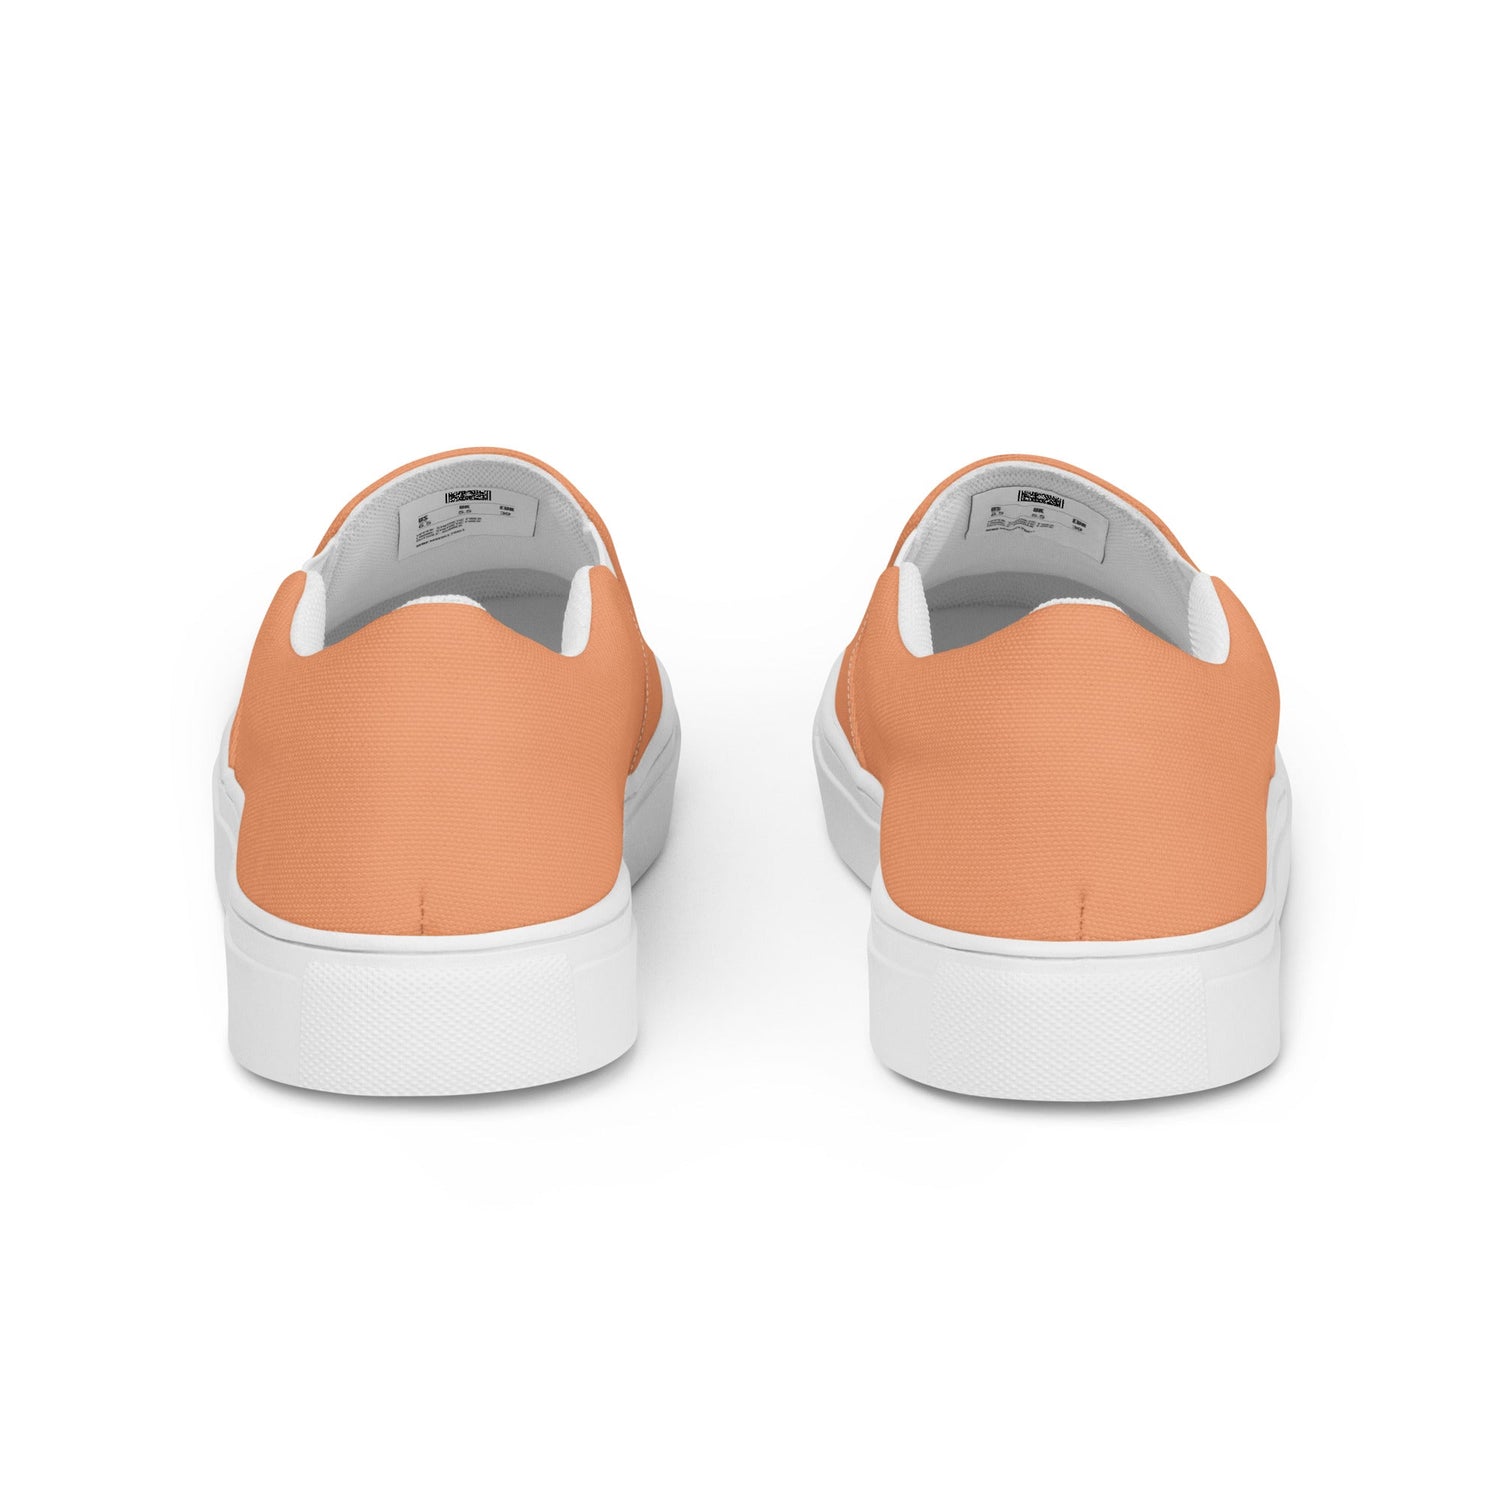 klasneakers Women’s slip-on canvas shoes - Peach